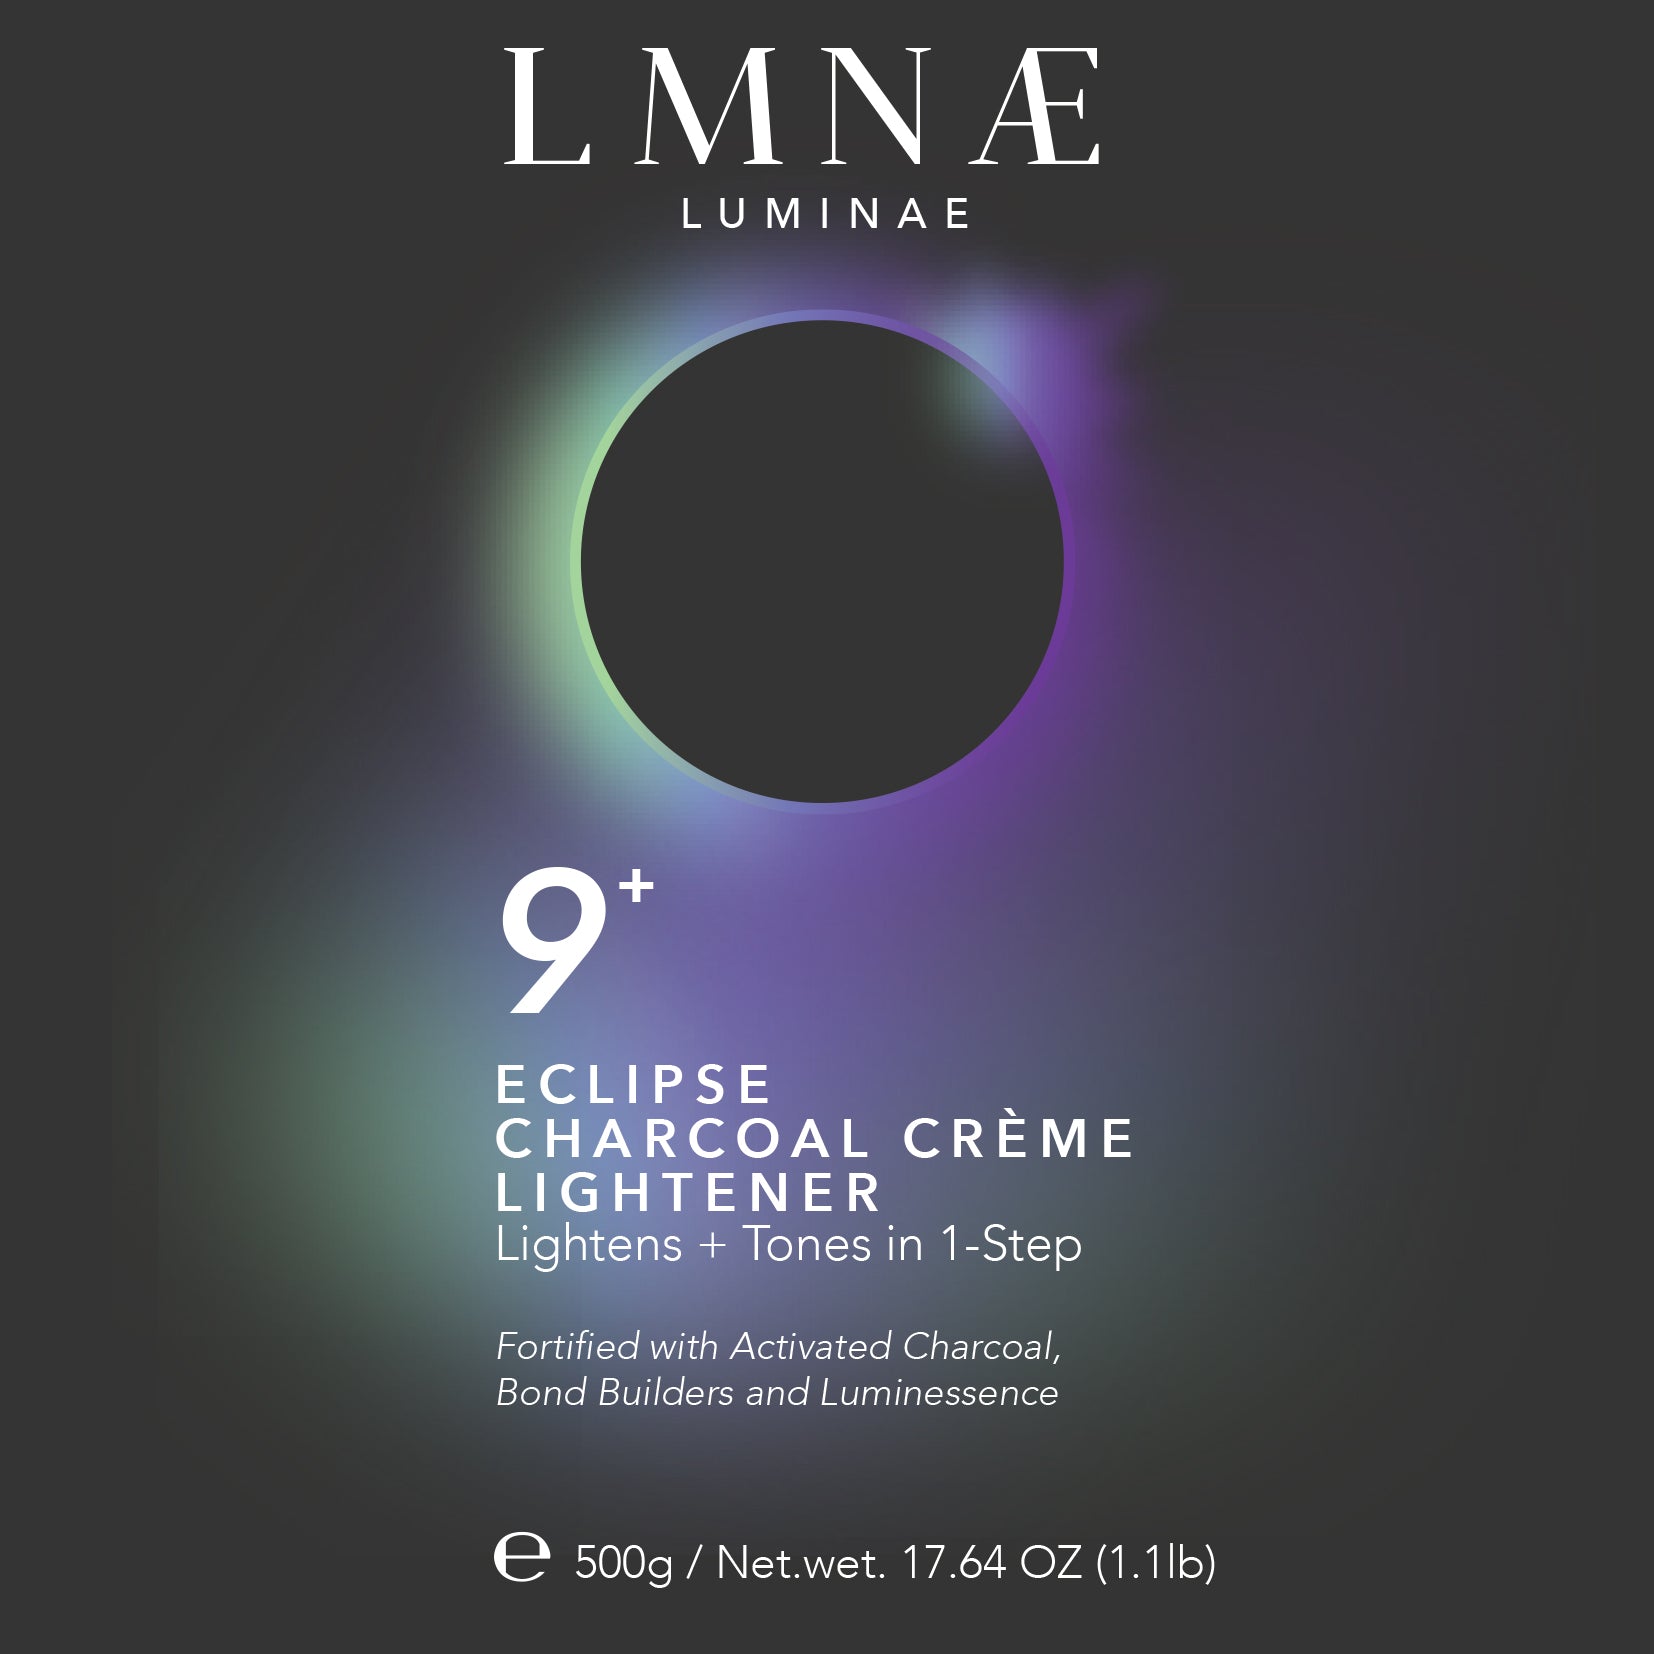 9+ Eclipse Charcoal Creme Lightener | Launch Kit | Luminae HAIR COLOR LUMINAE 